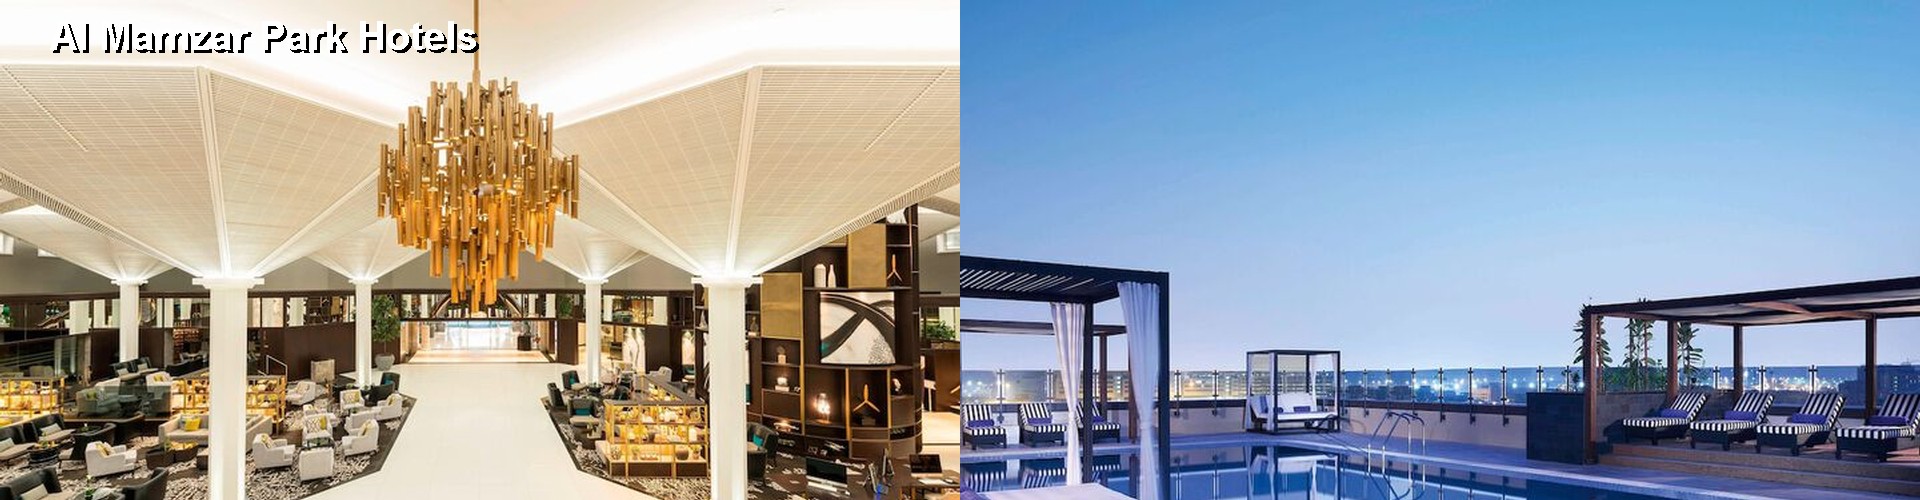 5 Best Hotels near Al Mamzar Park